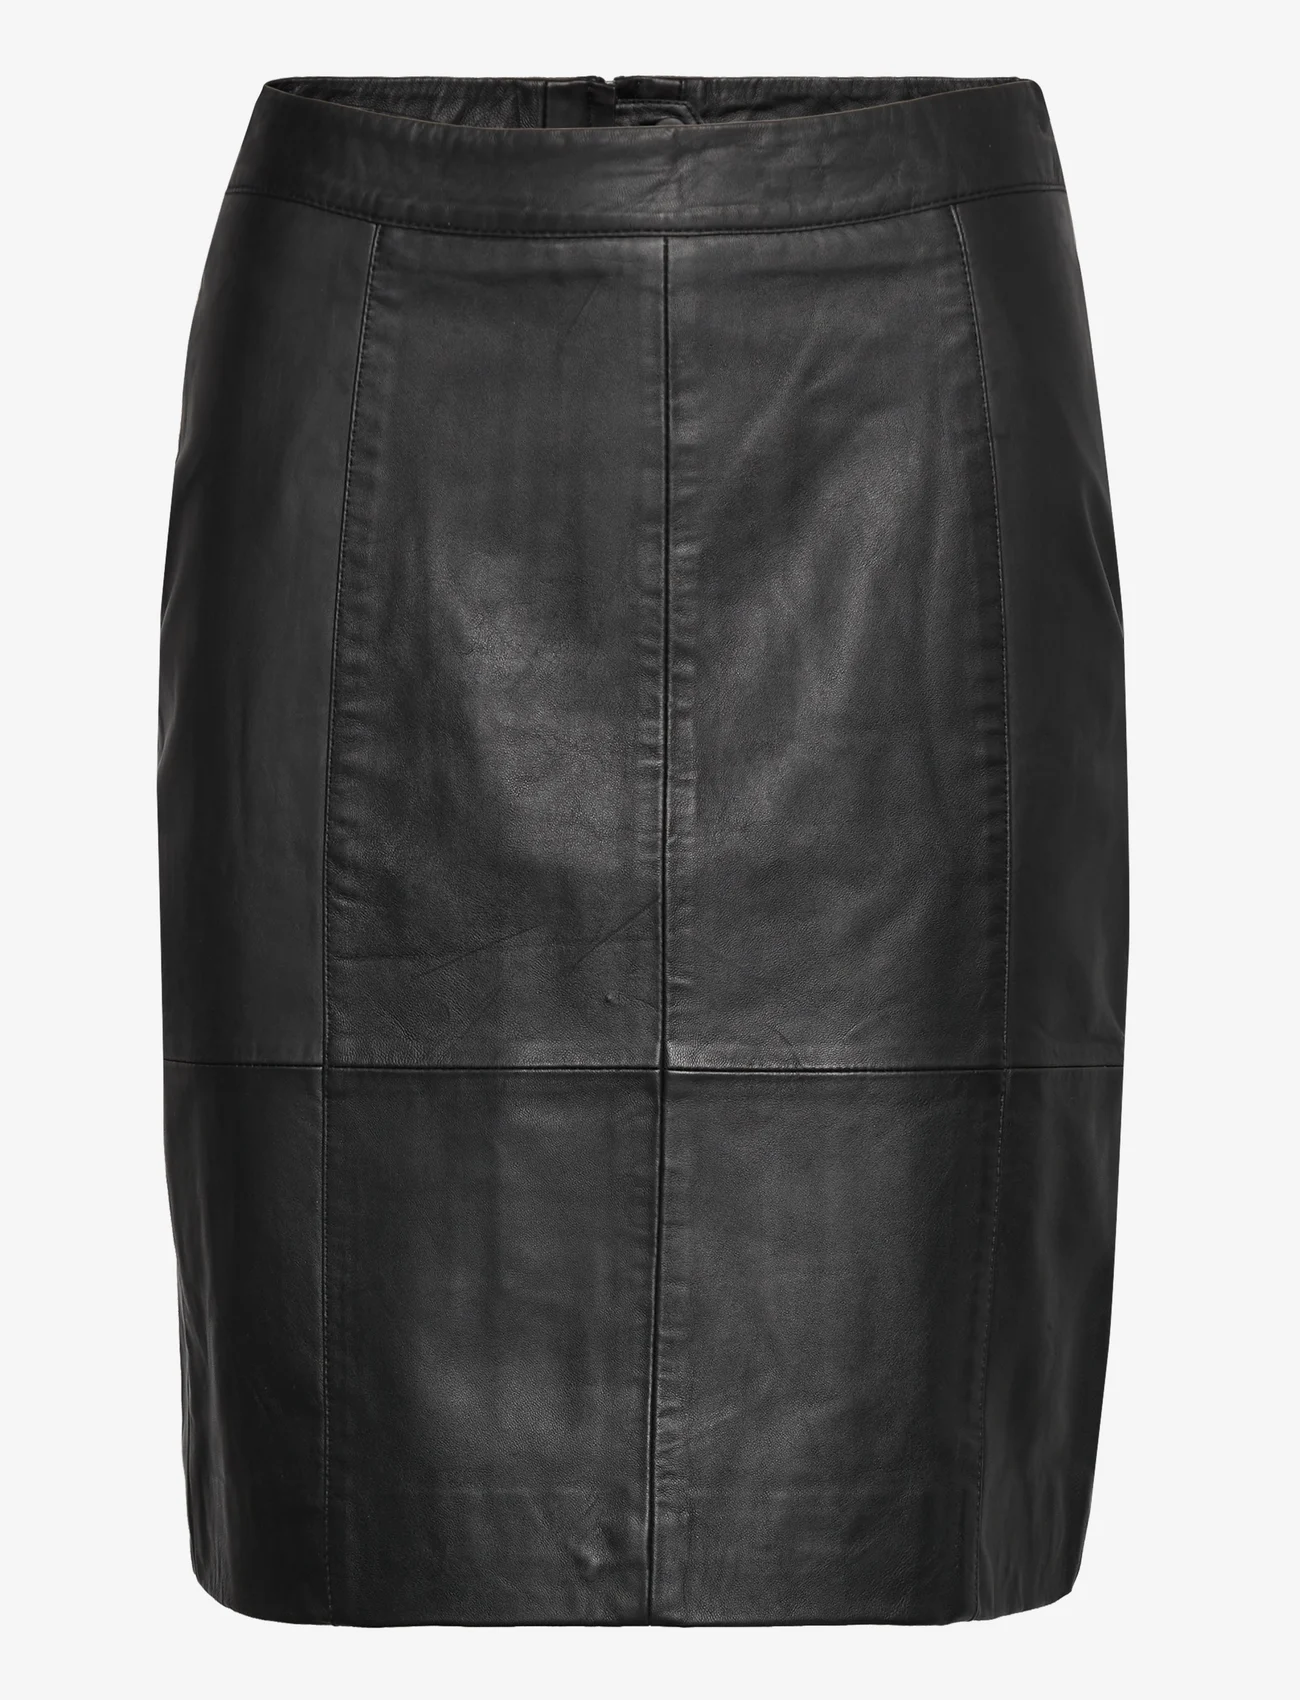 DEPECHE - DicteDEP Leather Skirt - leather skirts - black - 0